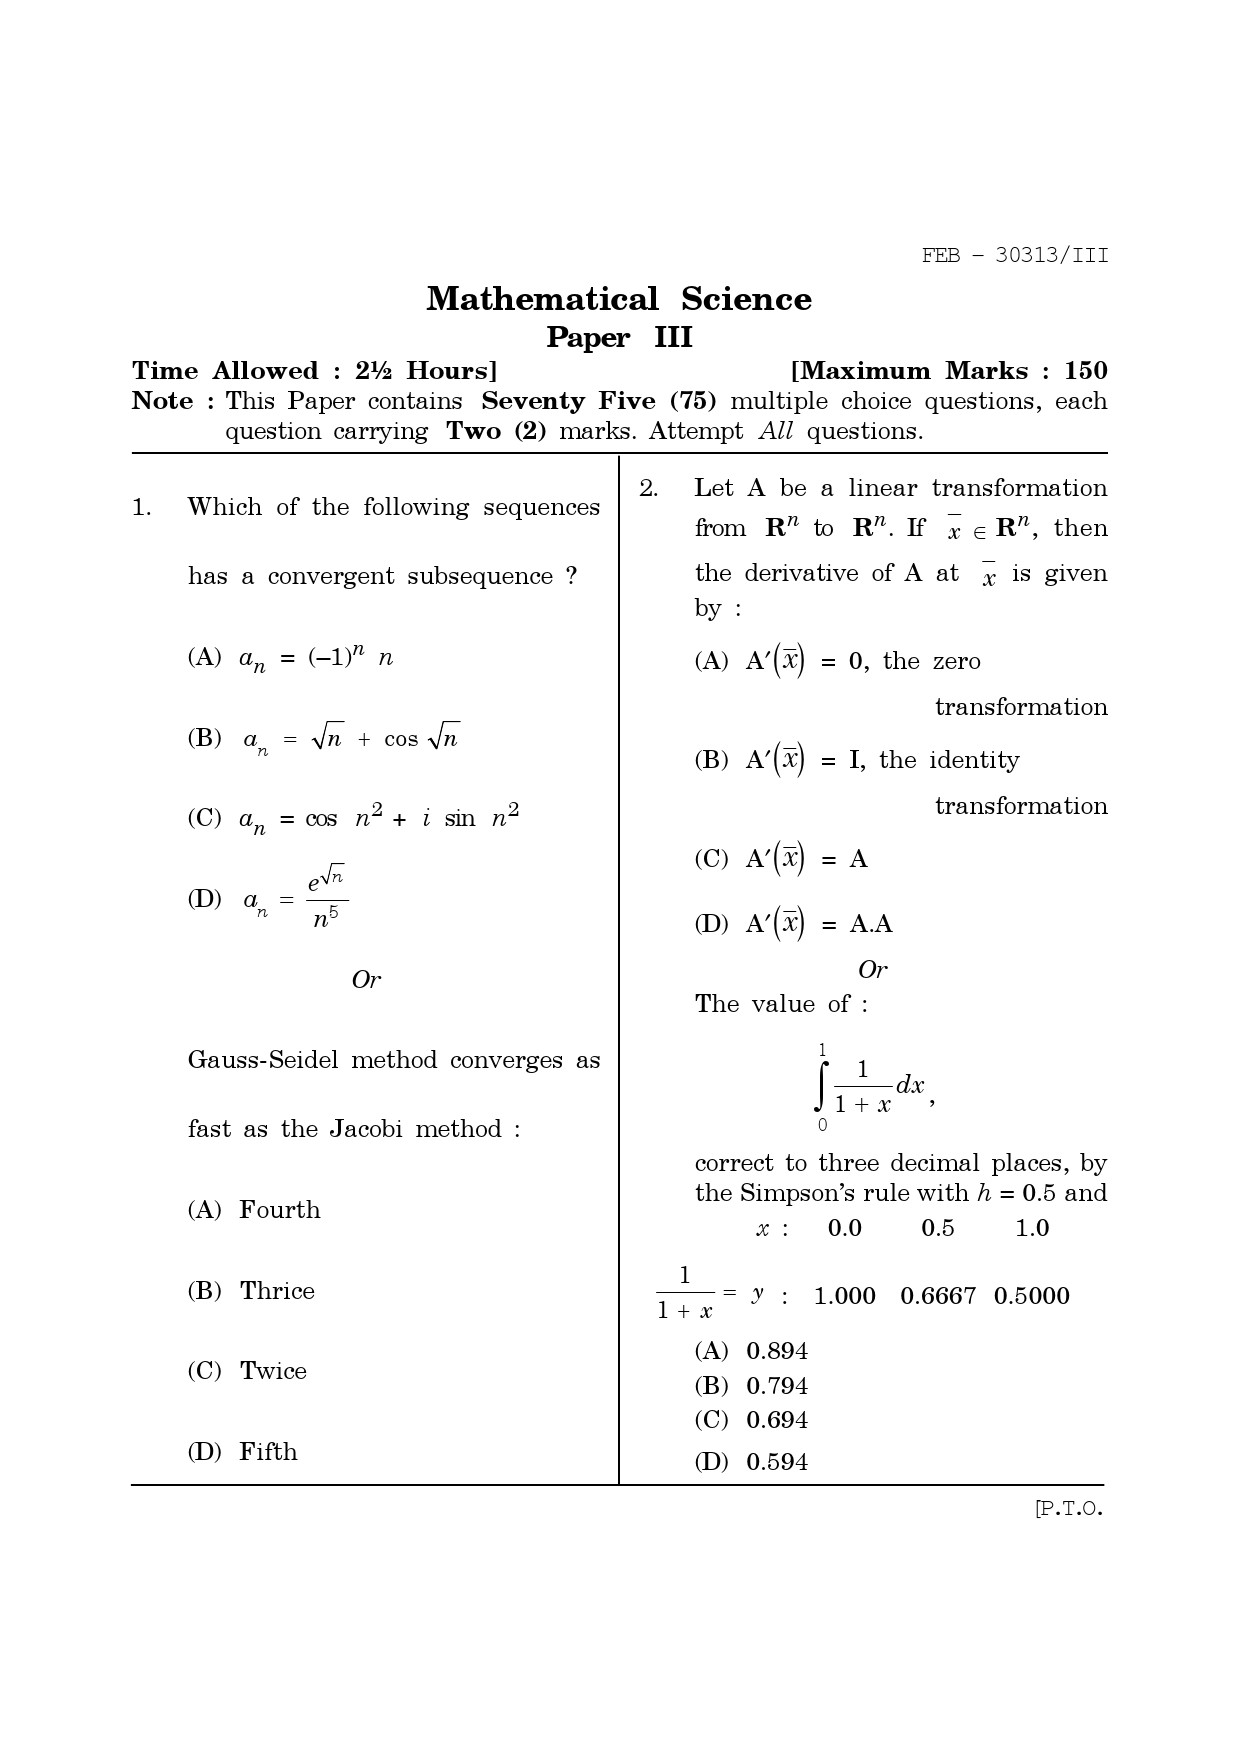 Maharashtra SET Mathematical Sciences Question Paper III February 2013 1